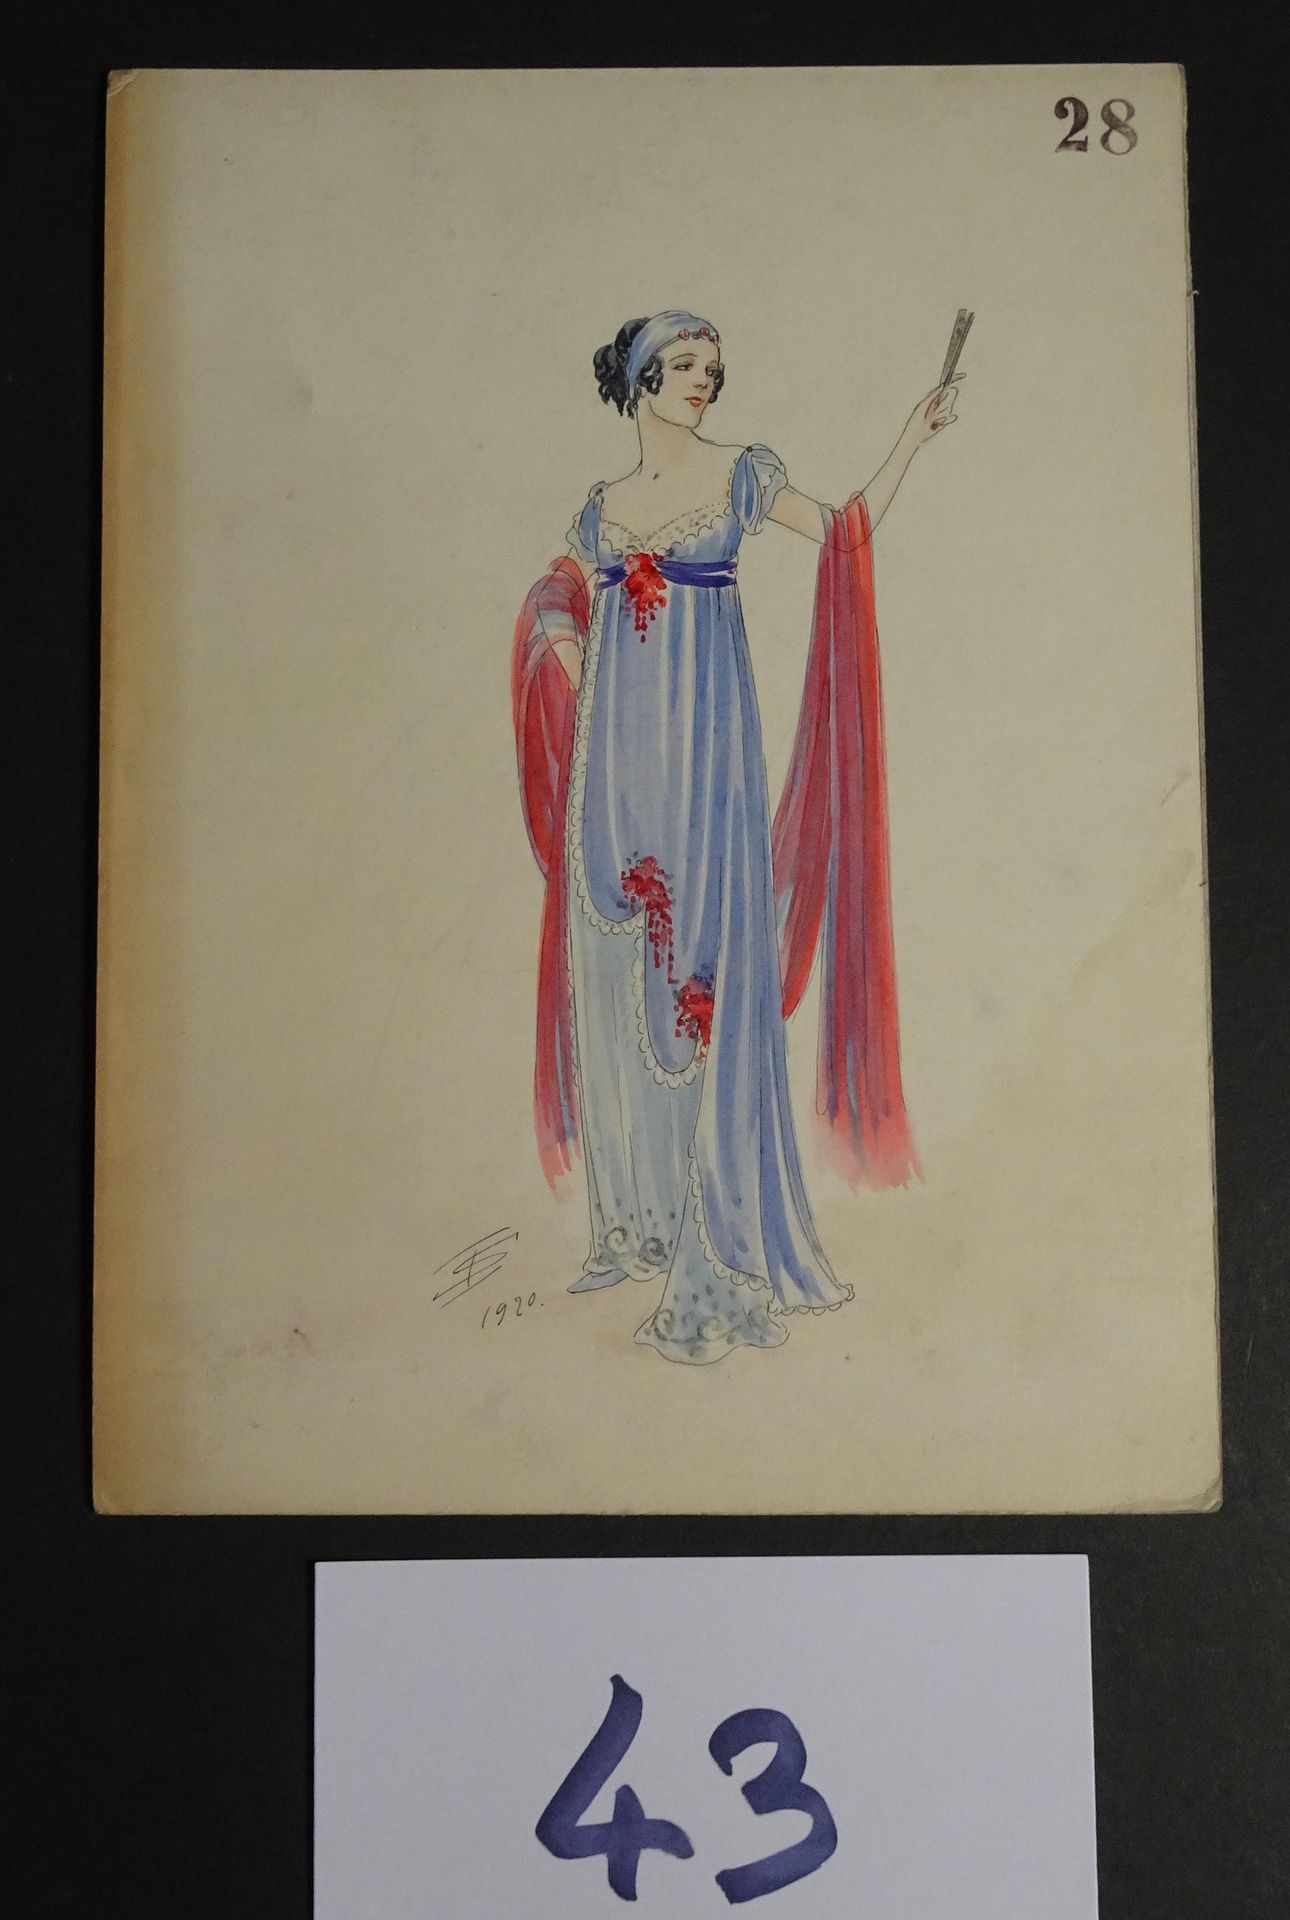 SOKOLOFF SOKOLOFF IGOR (principios del siglo XX) 

"Mujer con abanico". Pluma, t&hellip;